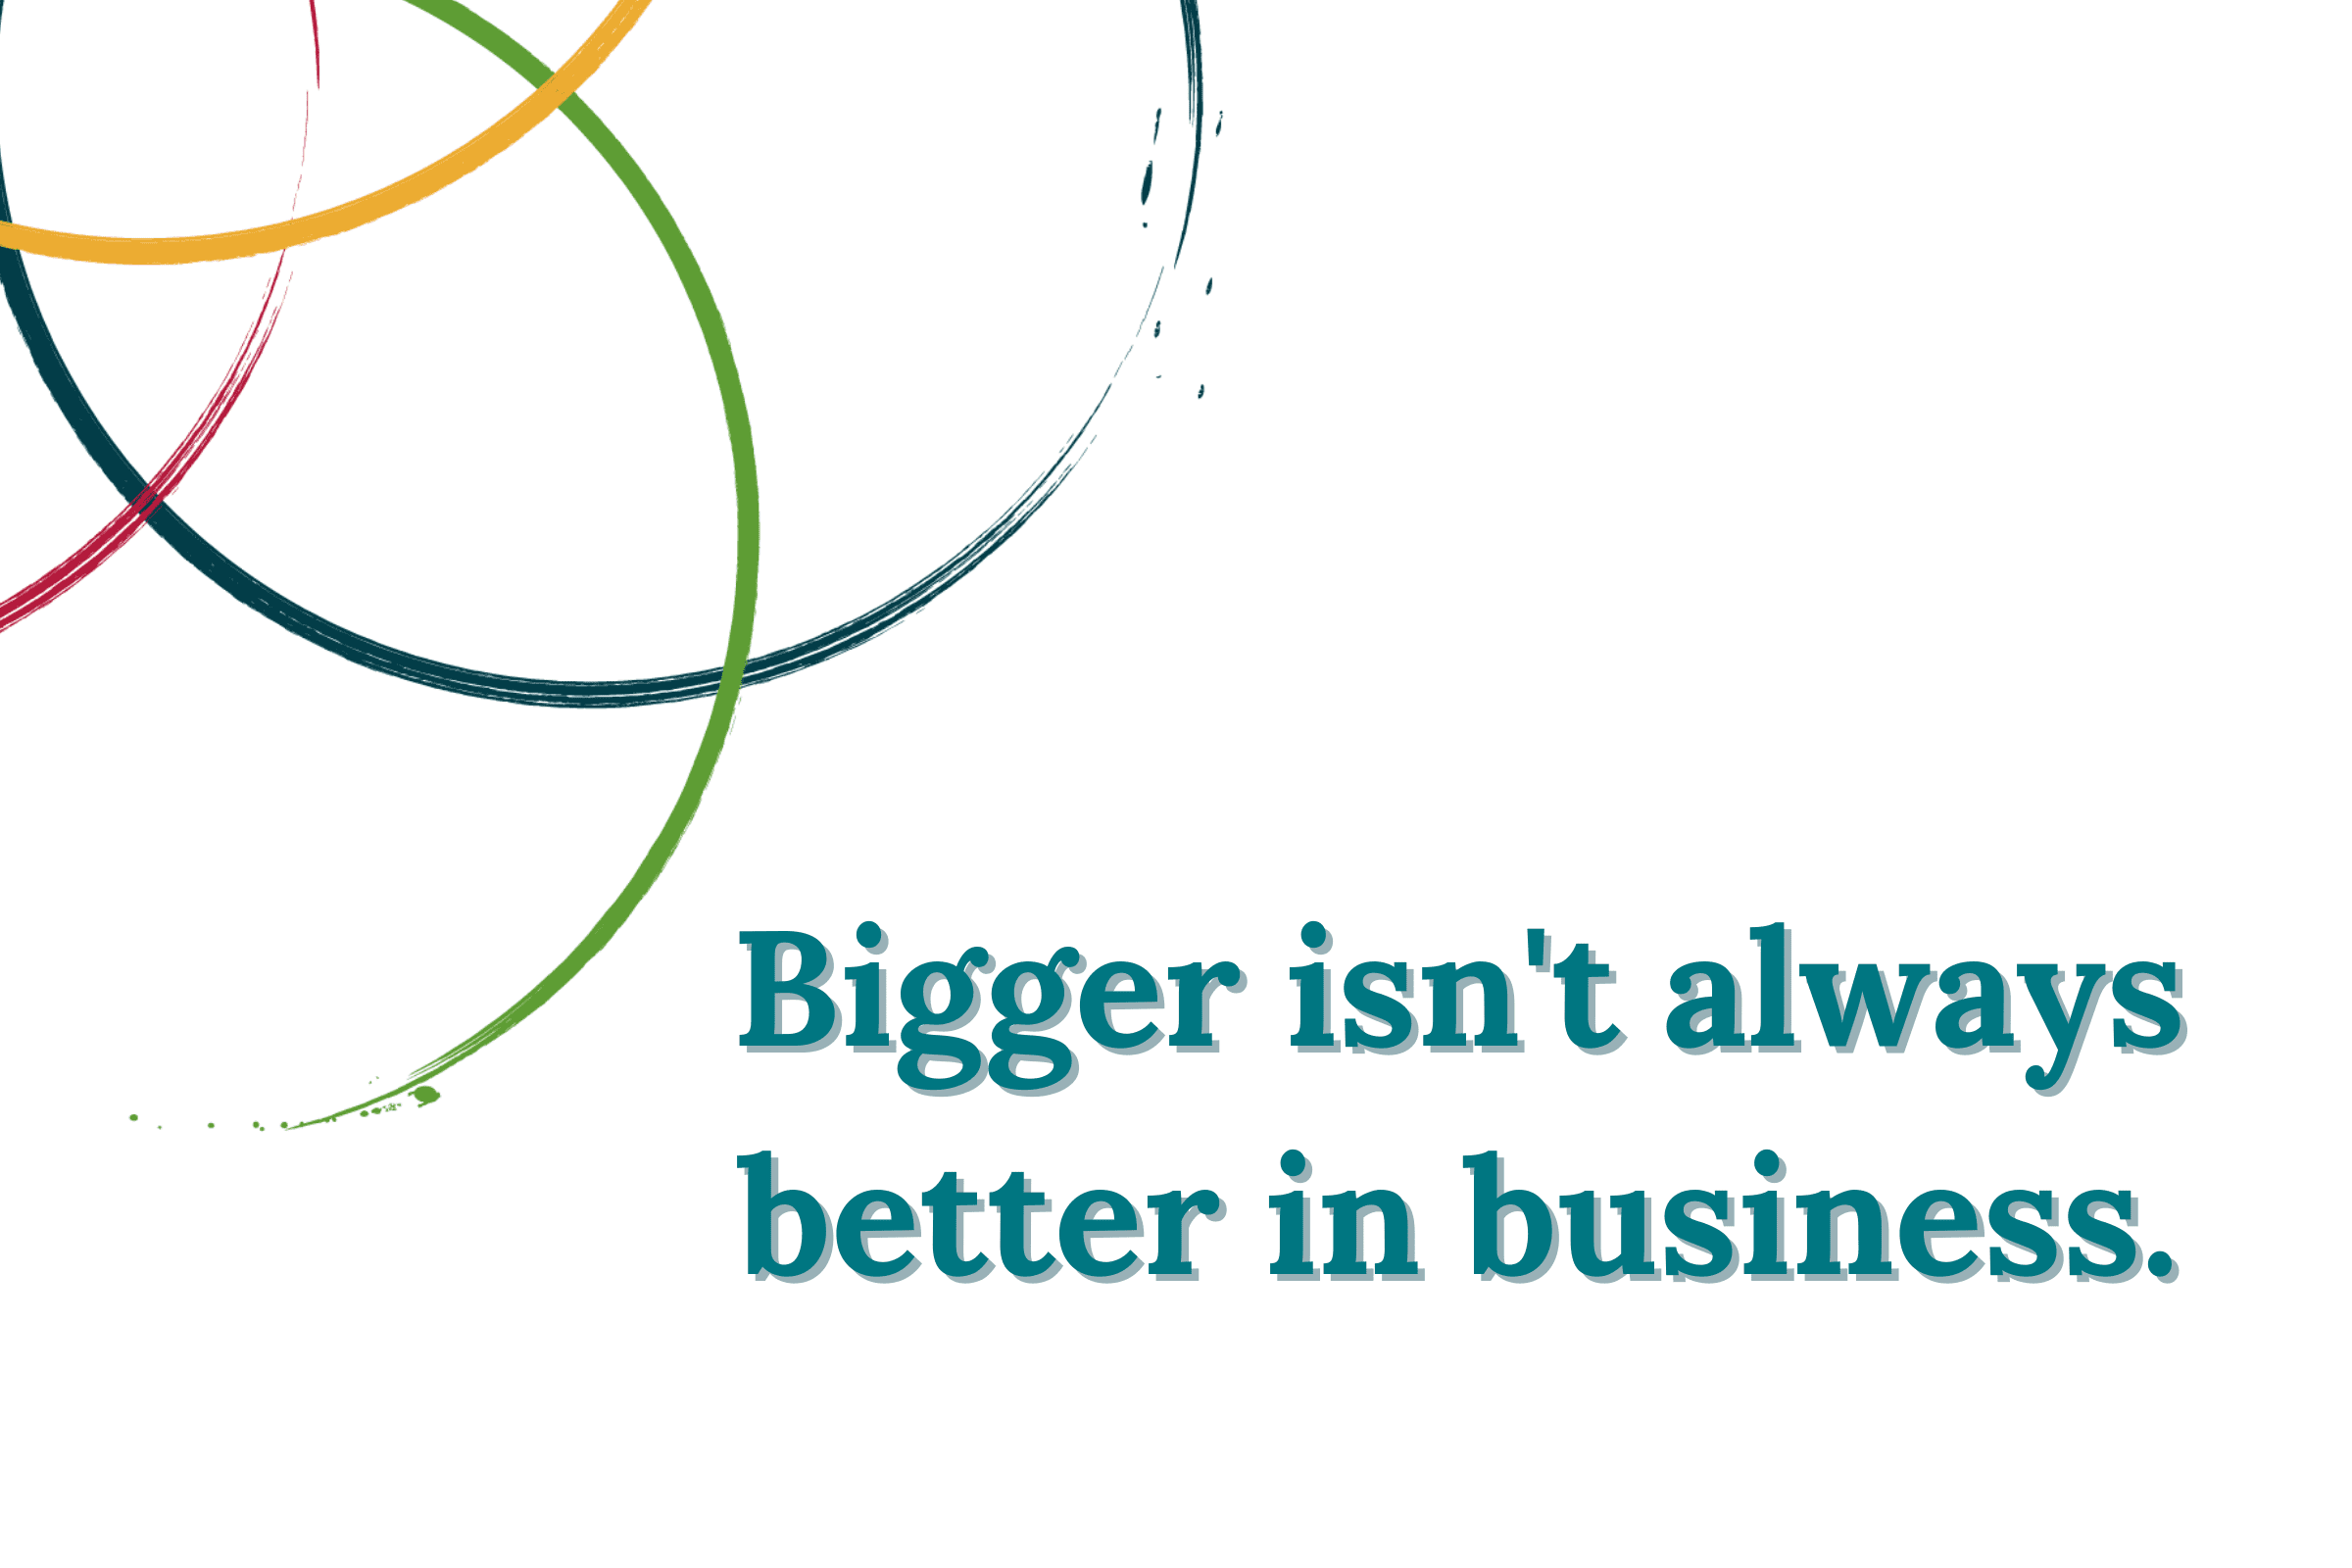 Bigger isn't always better in business